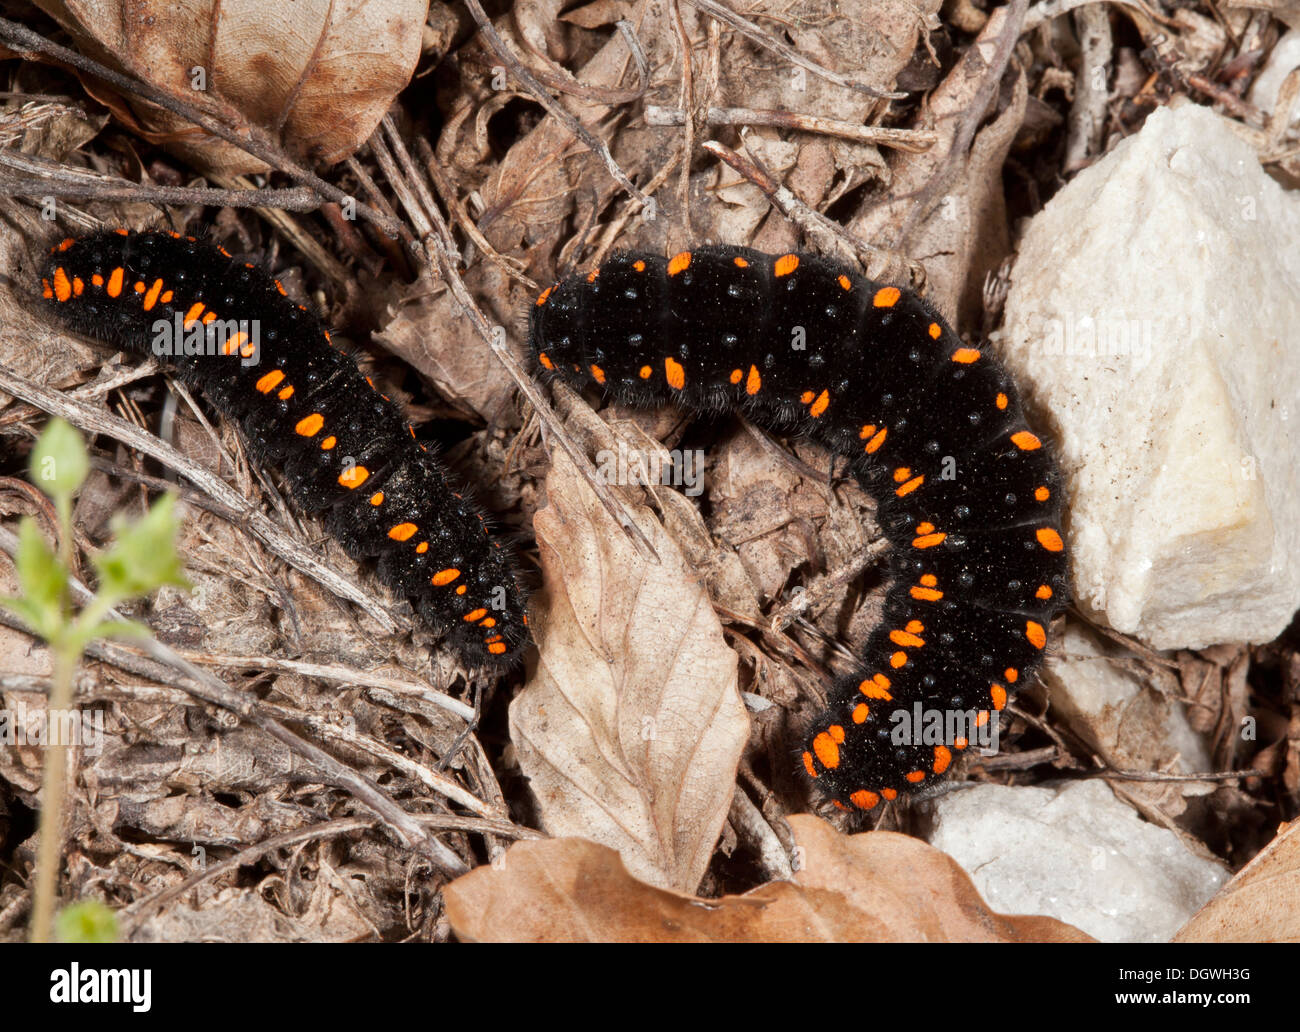 Caterpillars, or larvae, of Apollo butterfly, Parnassius apollo. Bulgaria. Stock Photo